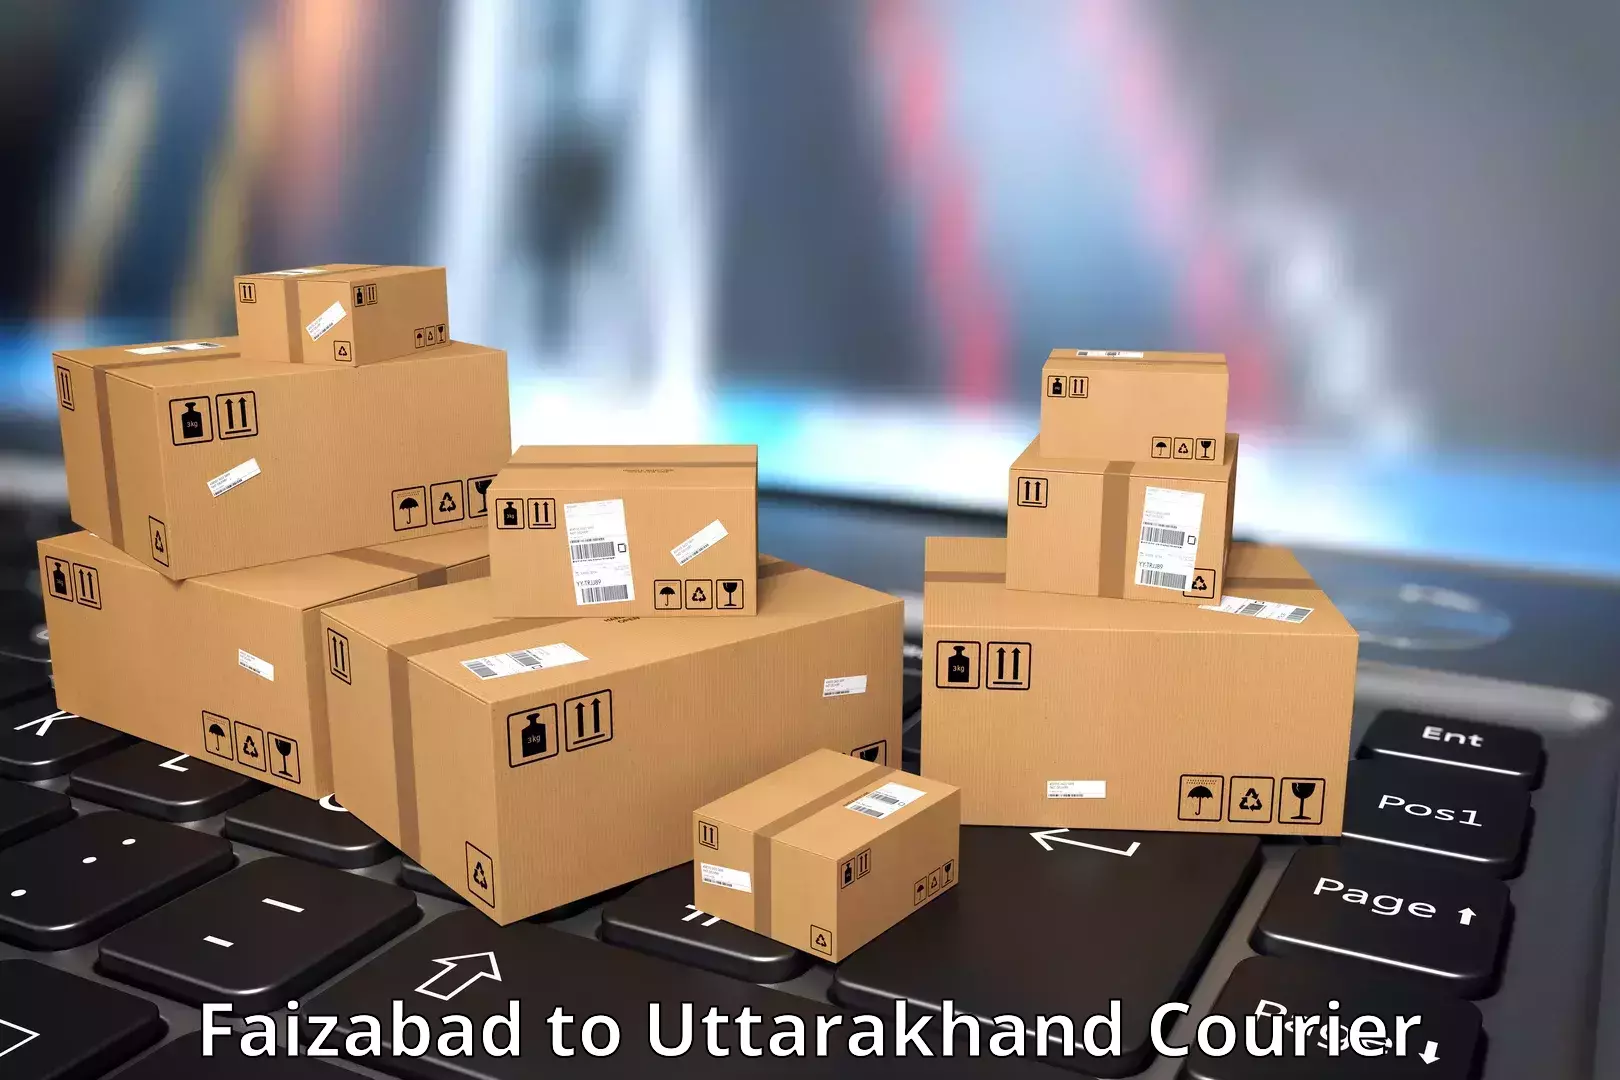 Medical delivery services Faizabad to Dehradun